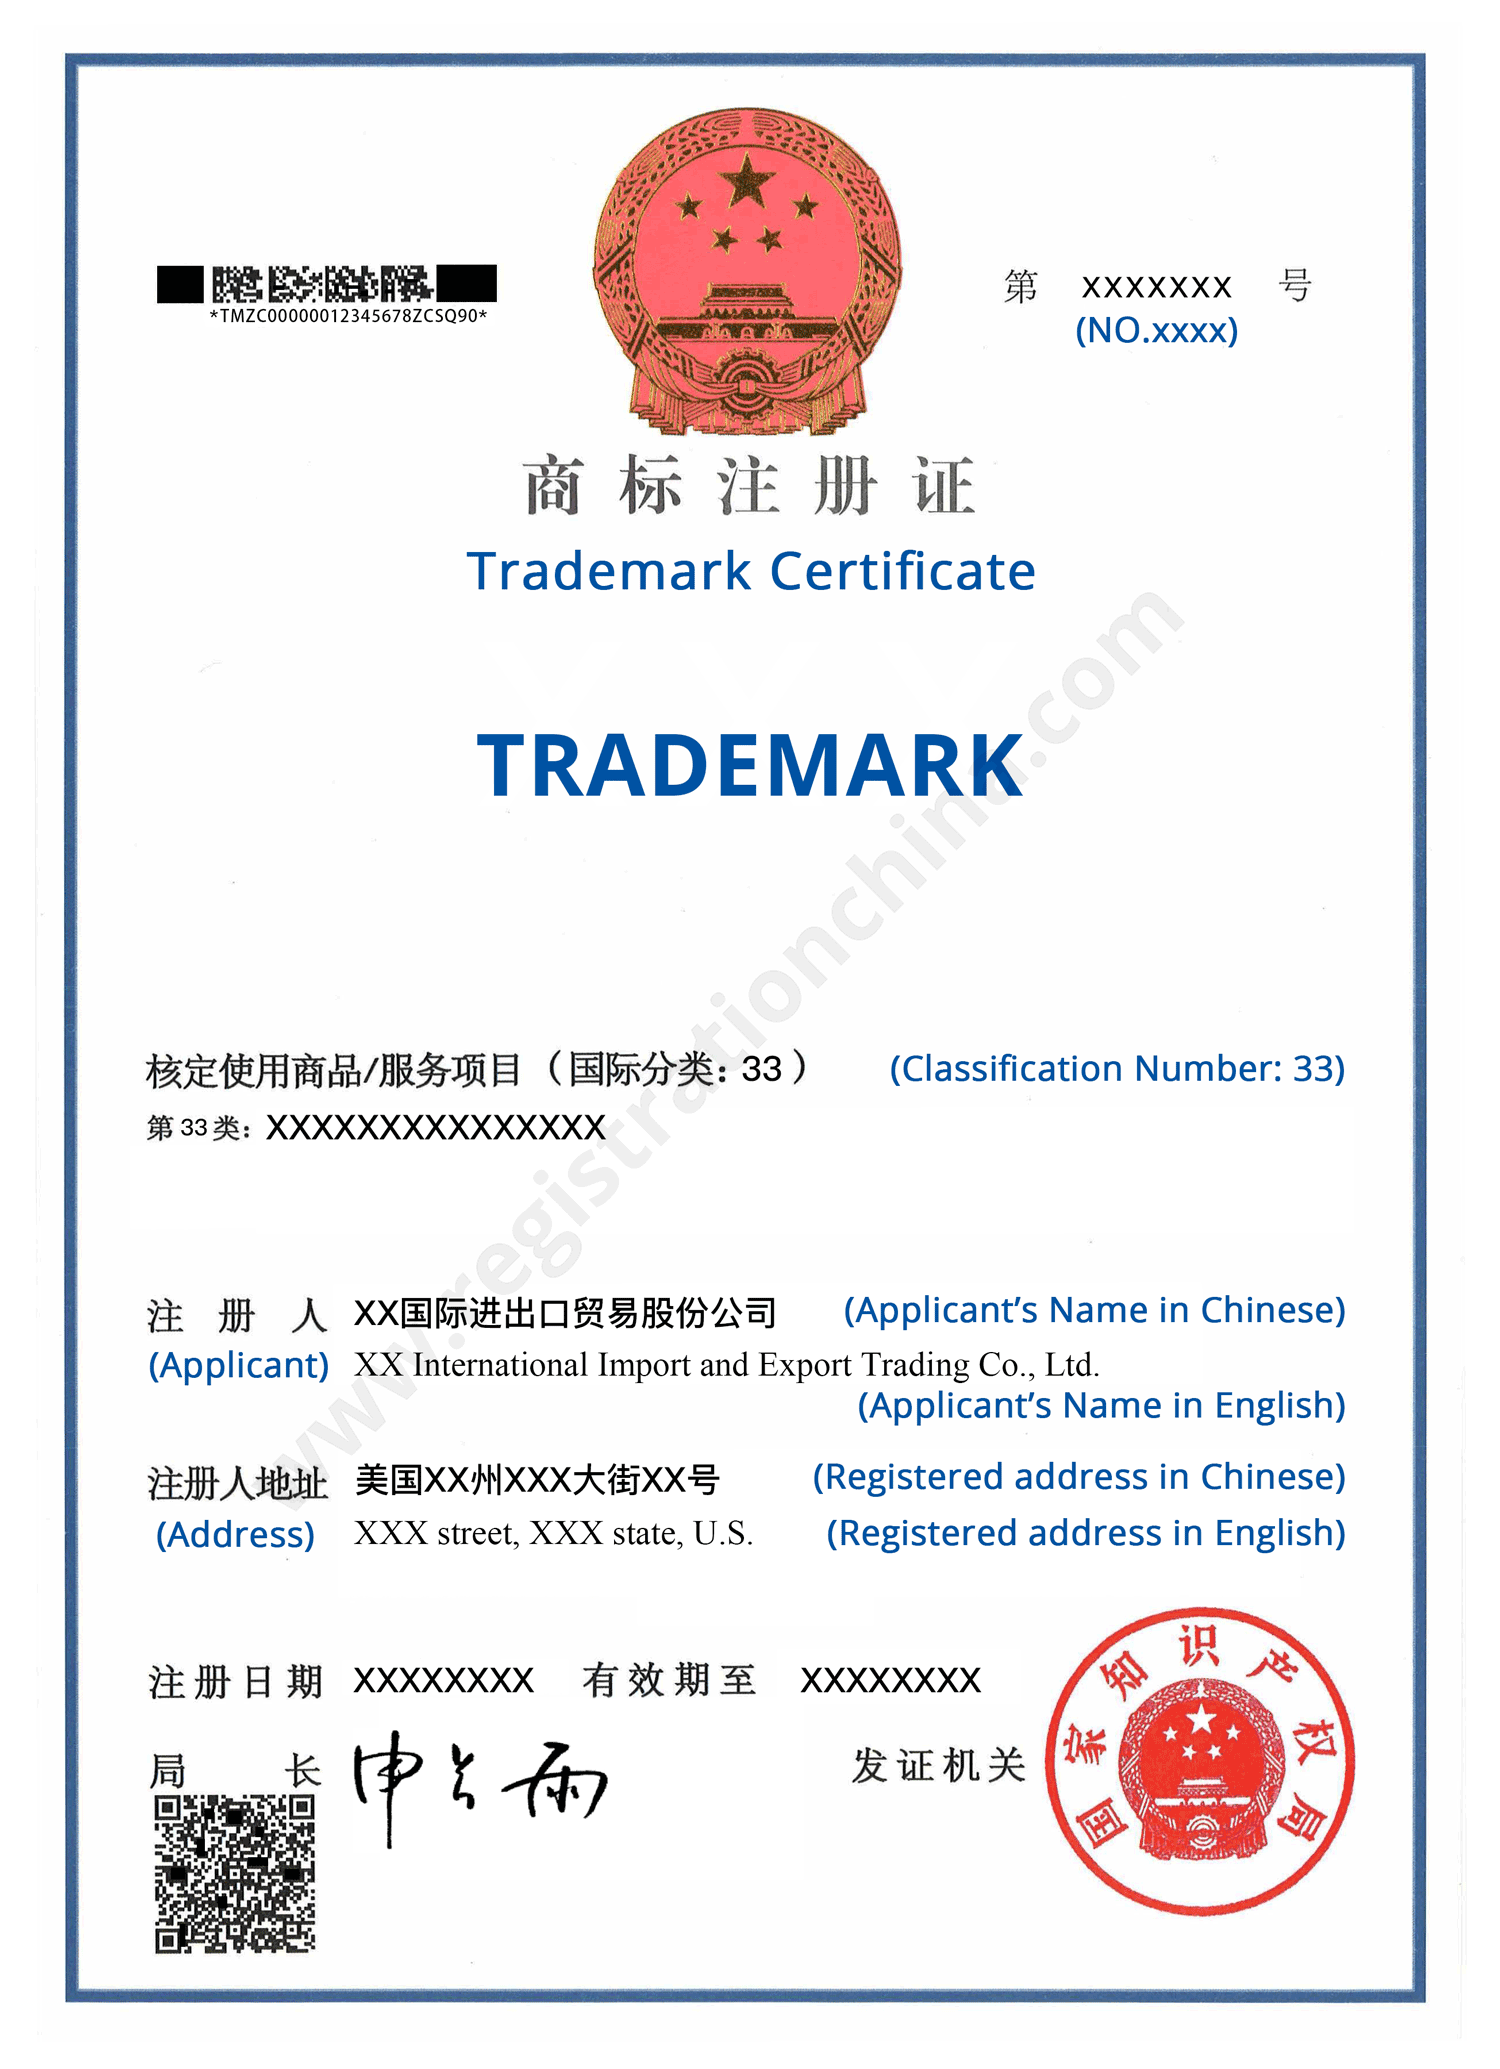 Arriba 34+ imagen china trademark & patent law office co ltd